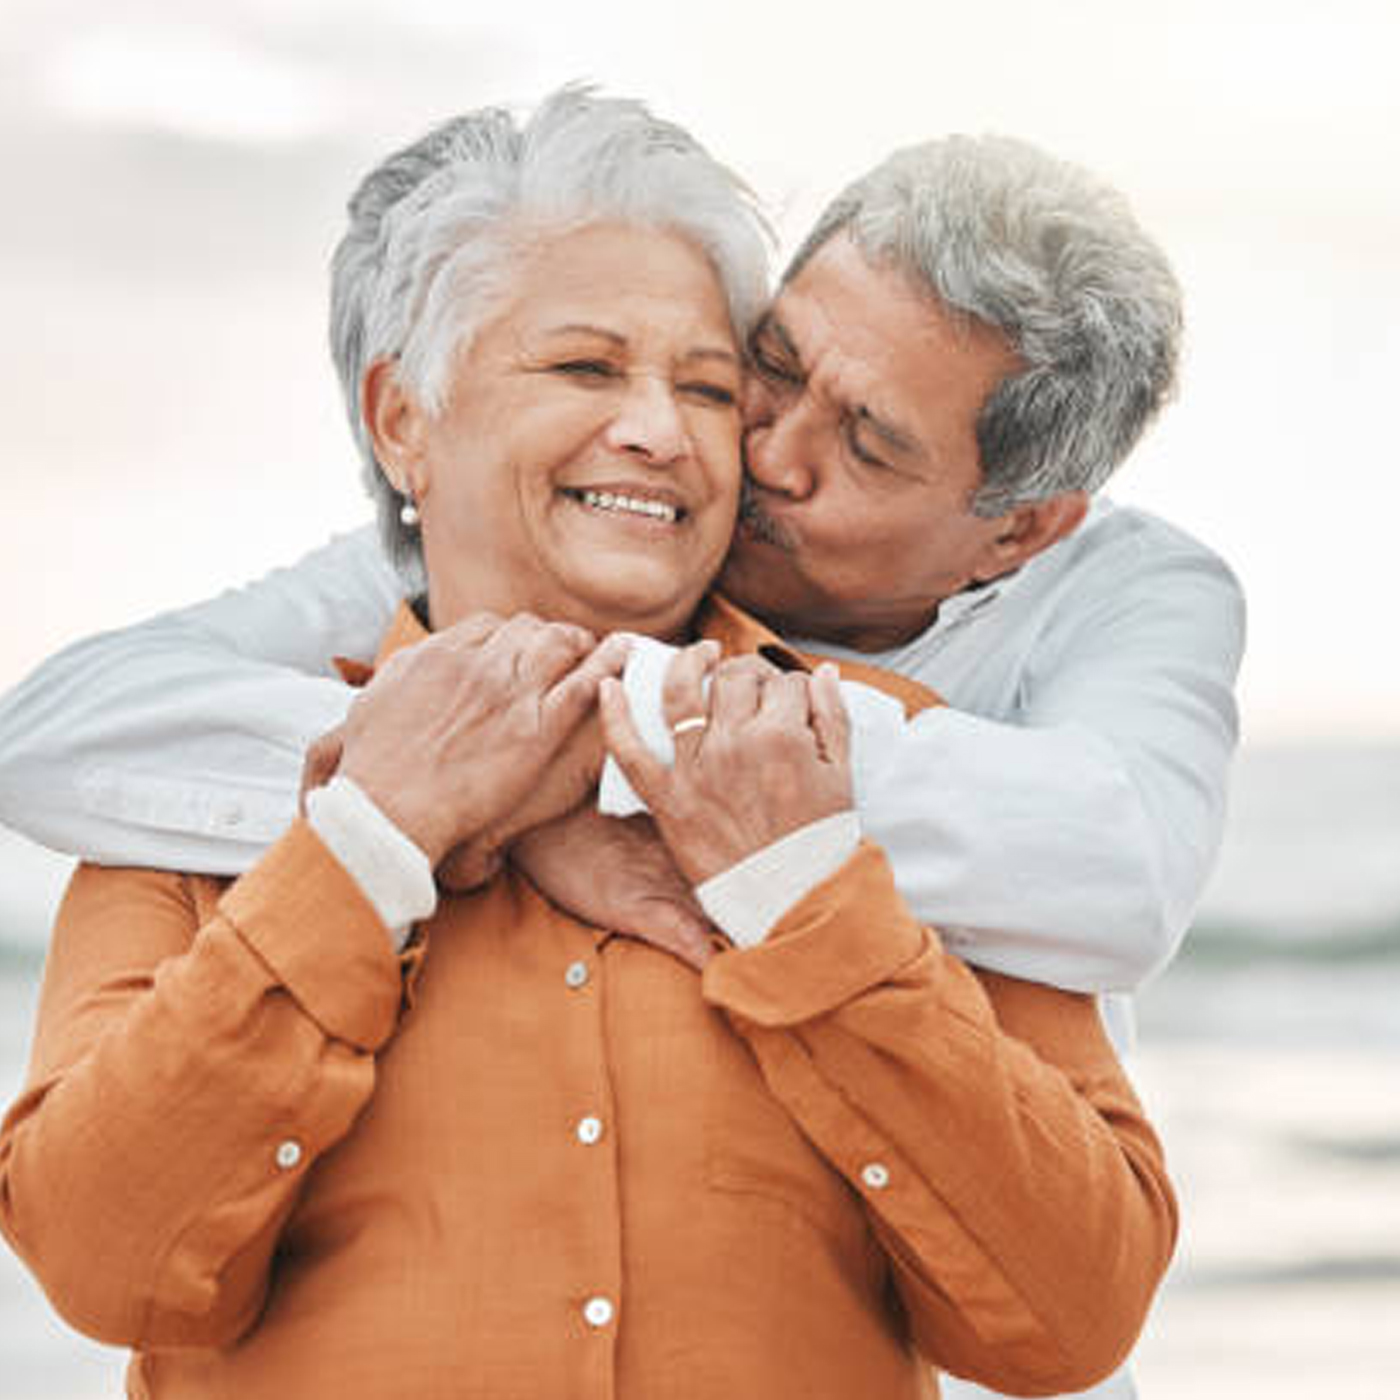 hispanic latino elderly couple hugging and kissing